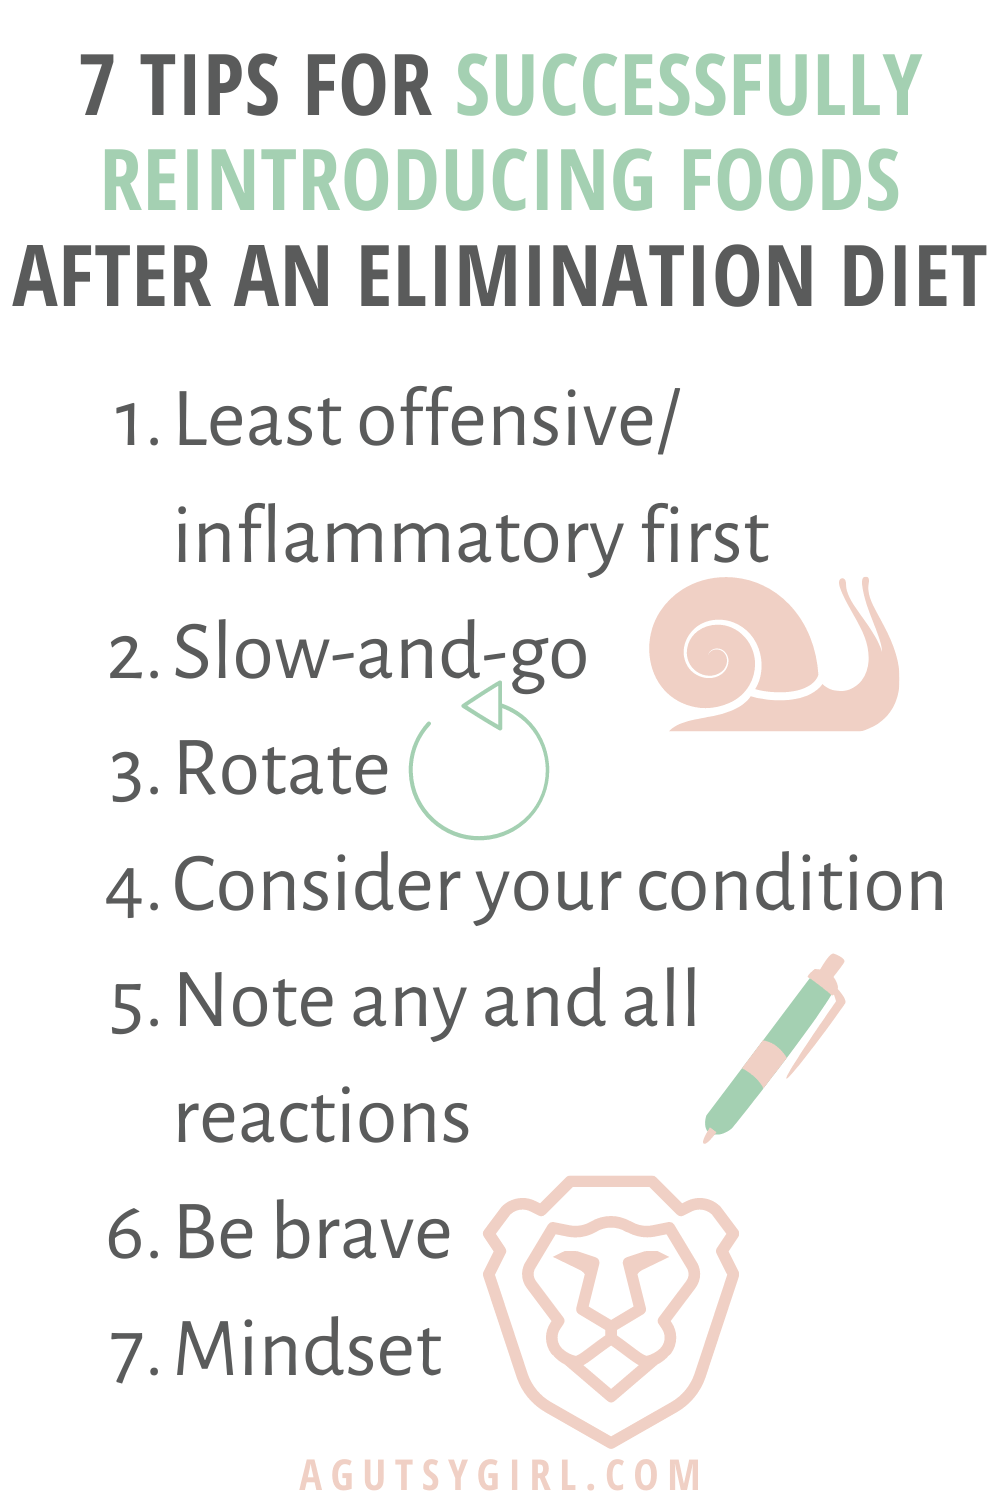 7 Tips for Reintroducing Foods After an Elimination Diet agutsygirl.com #eliminationdiet #guthealth #SIBO